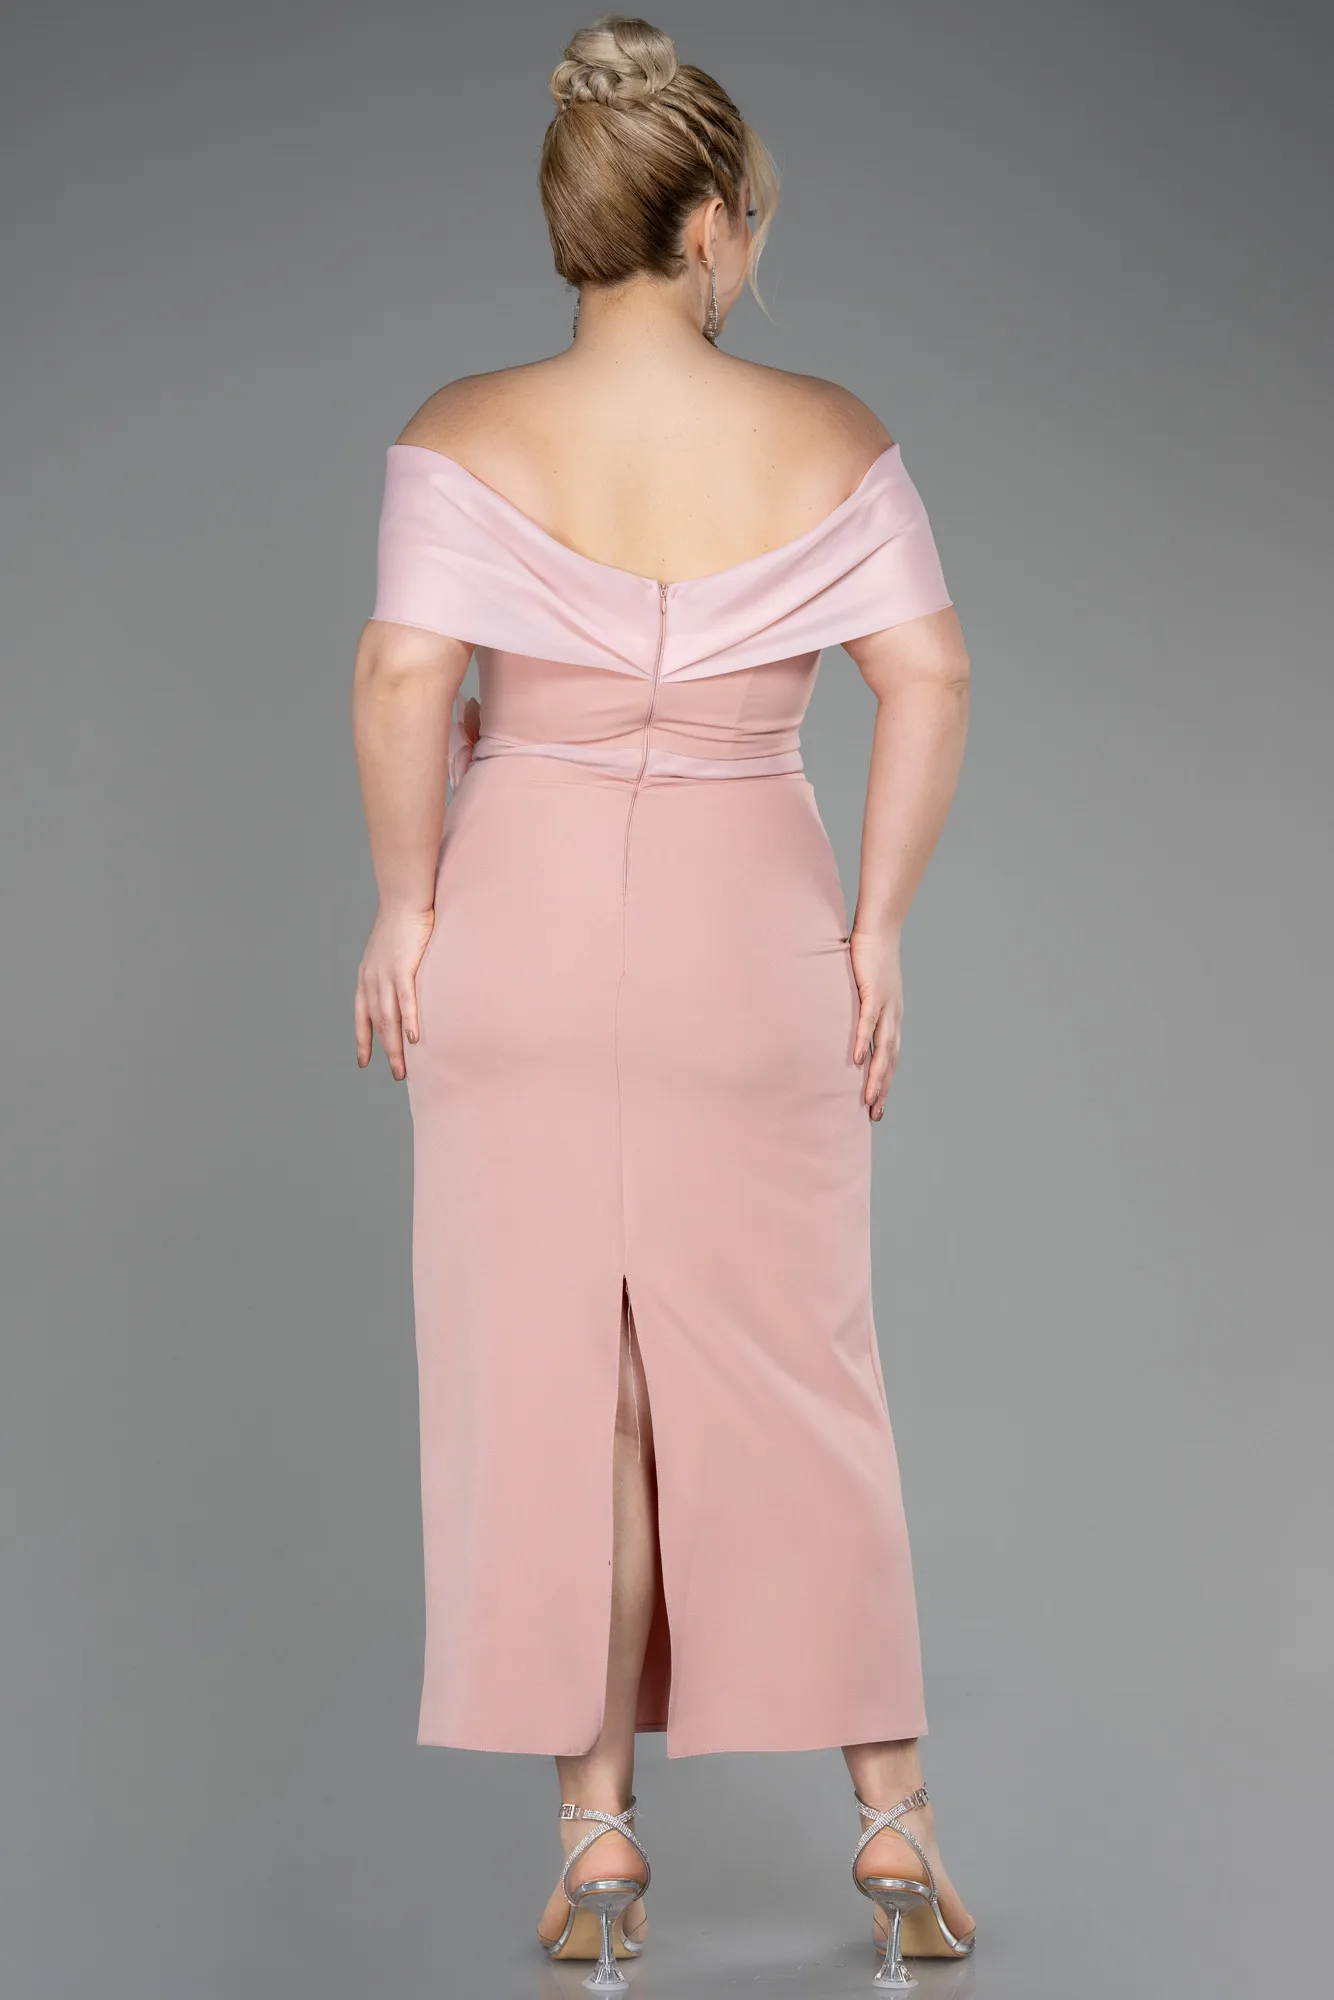 Powder Color-Midi Plus Size Cocktail Dress ABK2015